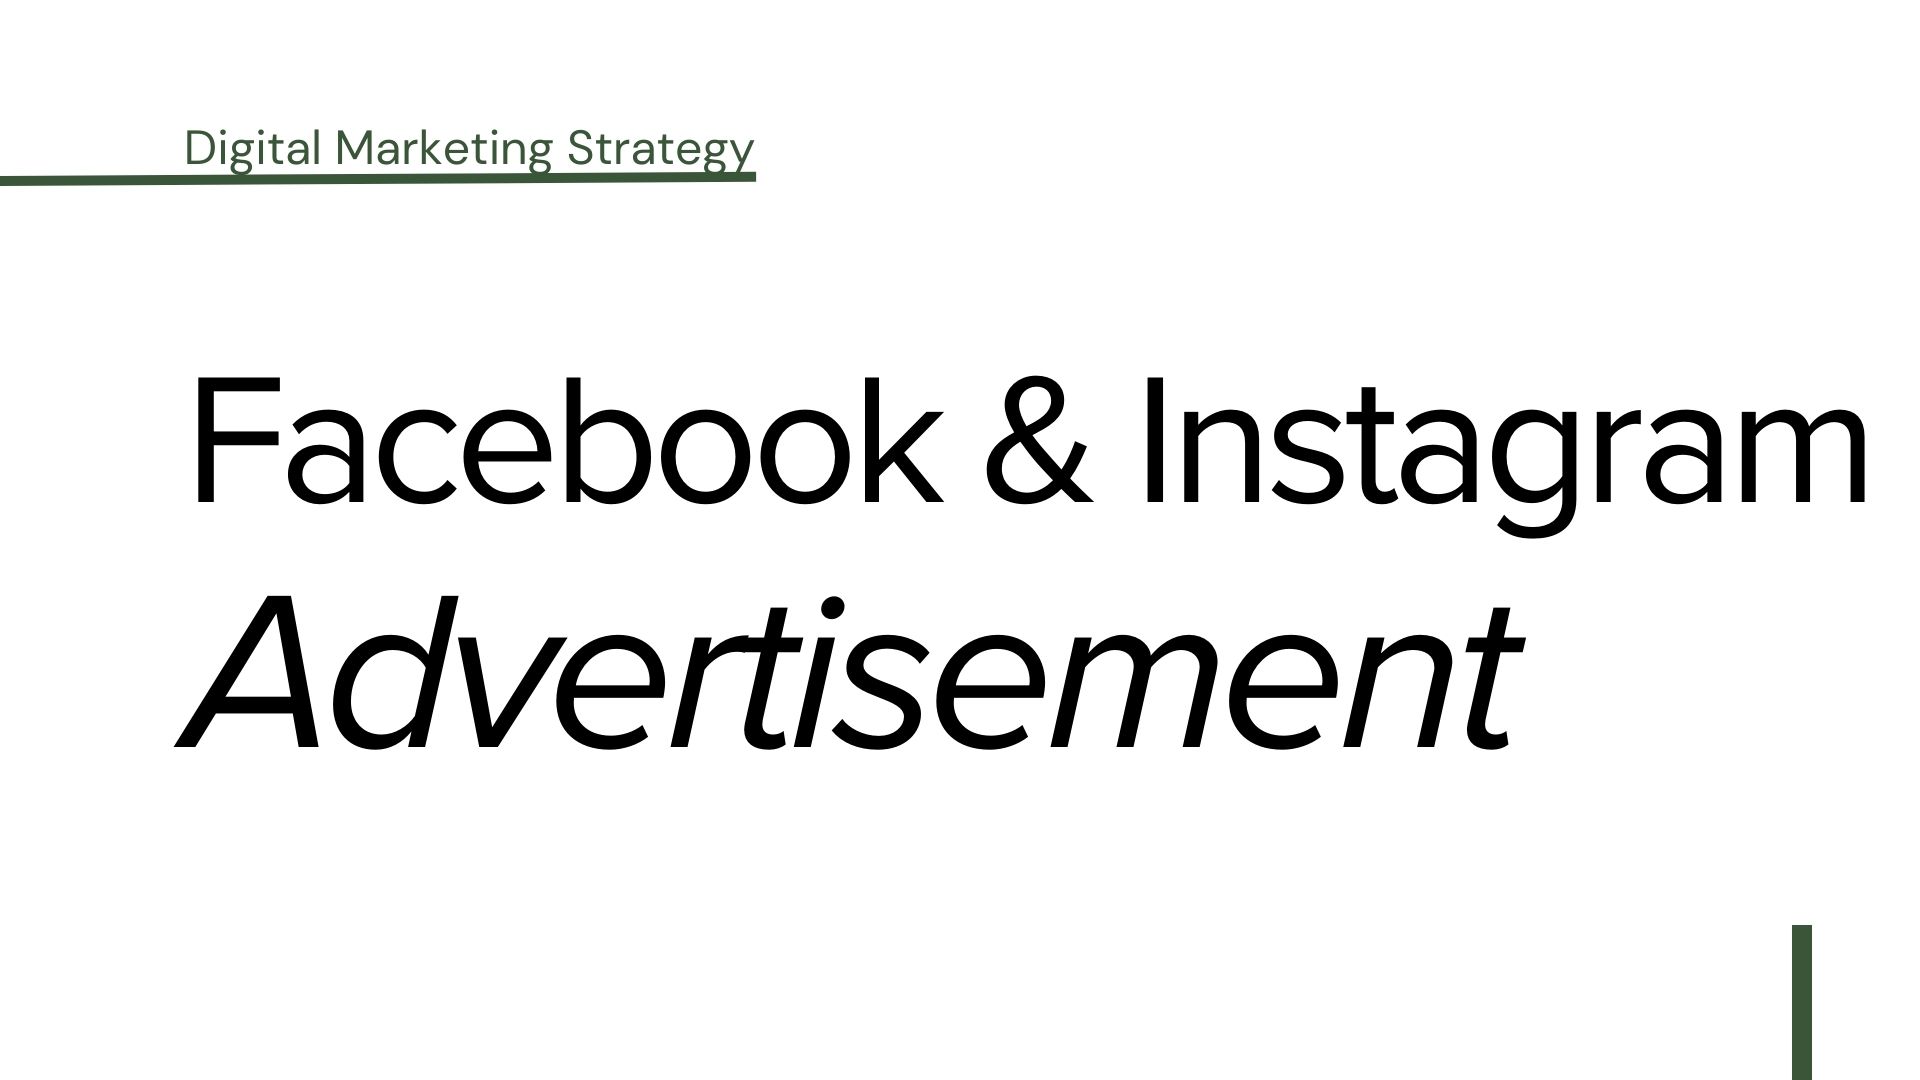 Digital Marketing Strategy: Facebook&Instagram Advertisement